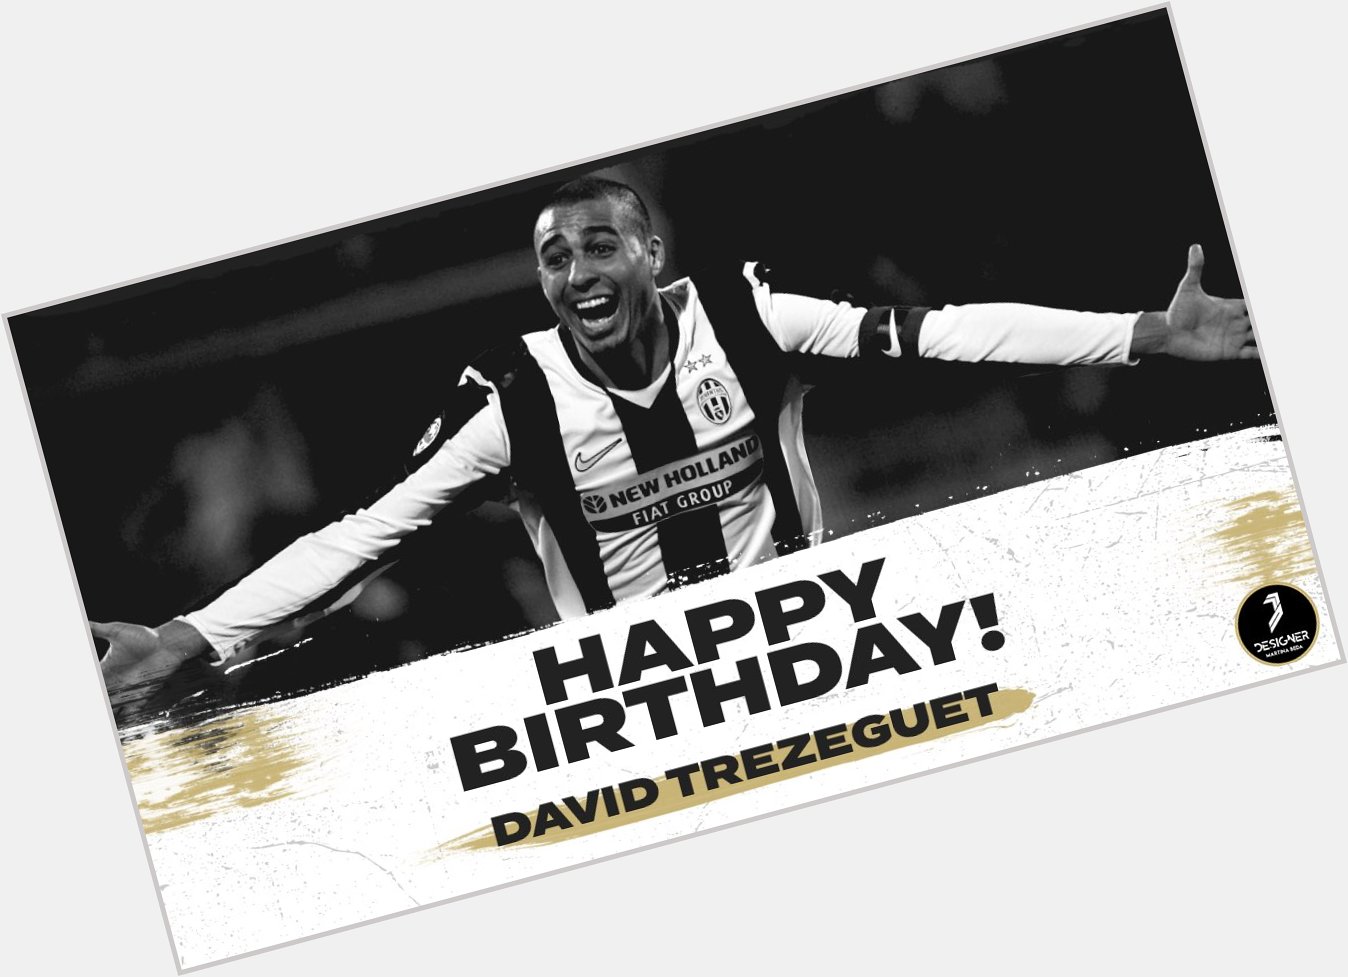 Happy birthday legend David Trezeguet 